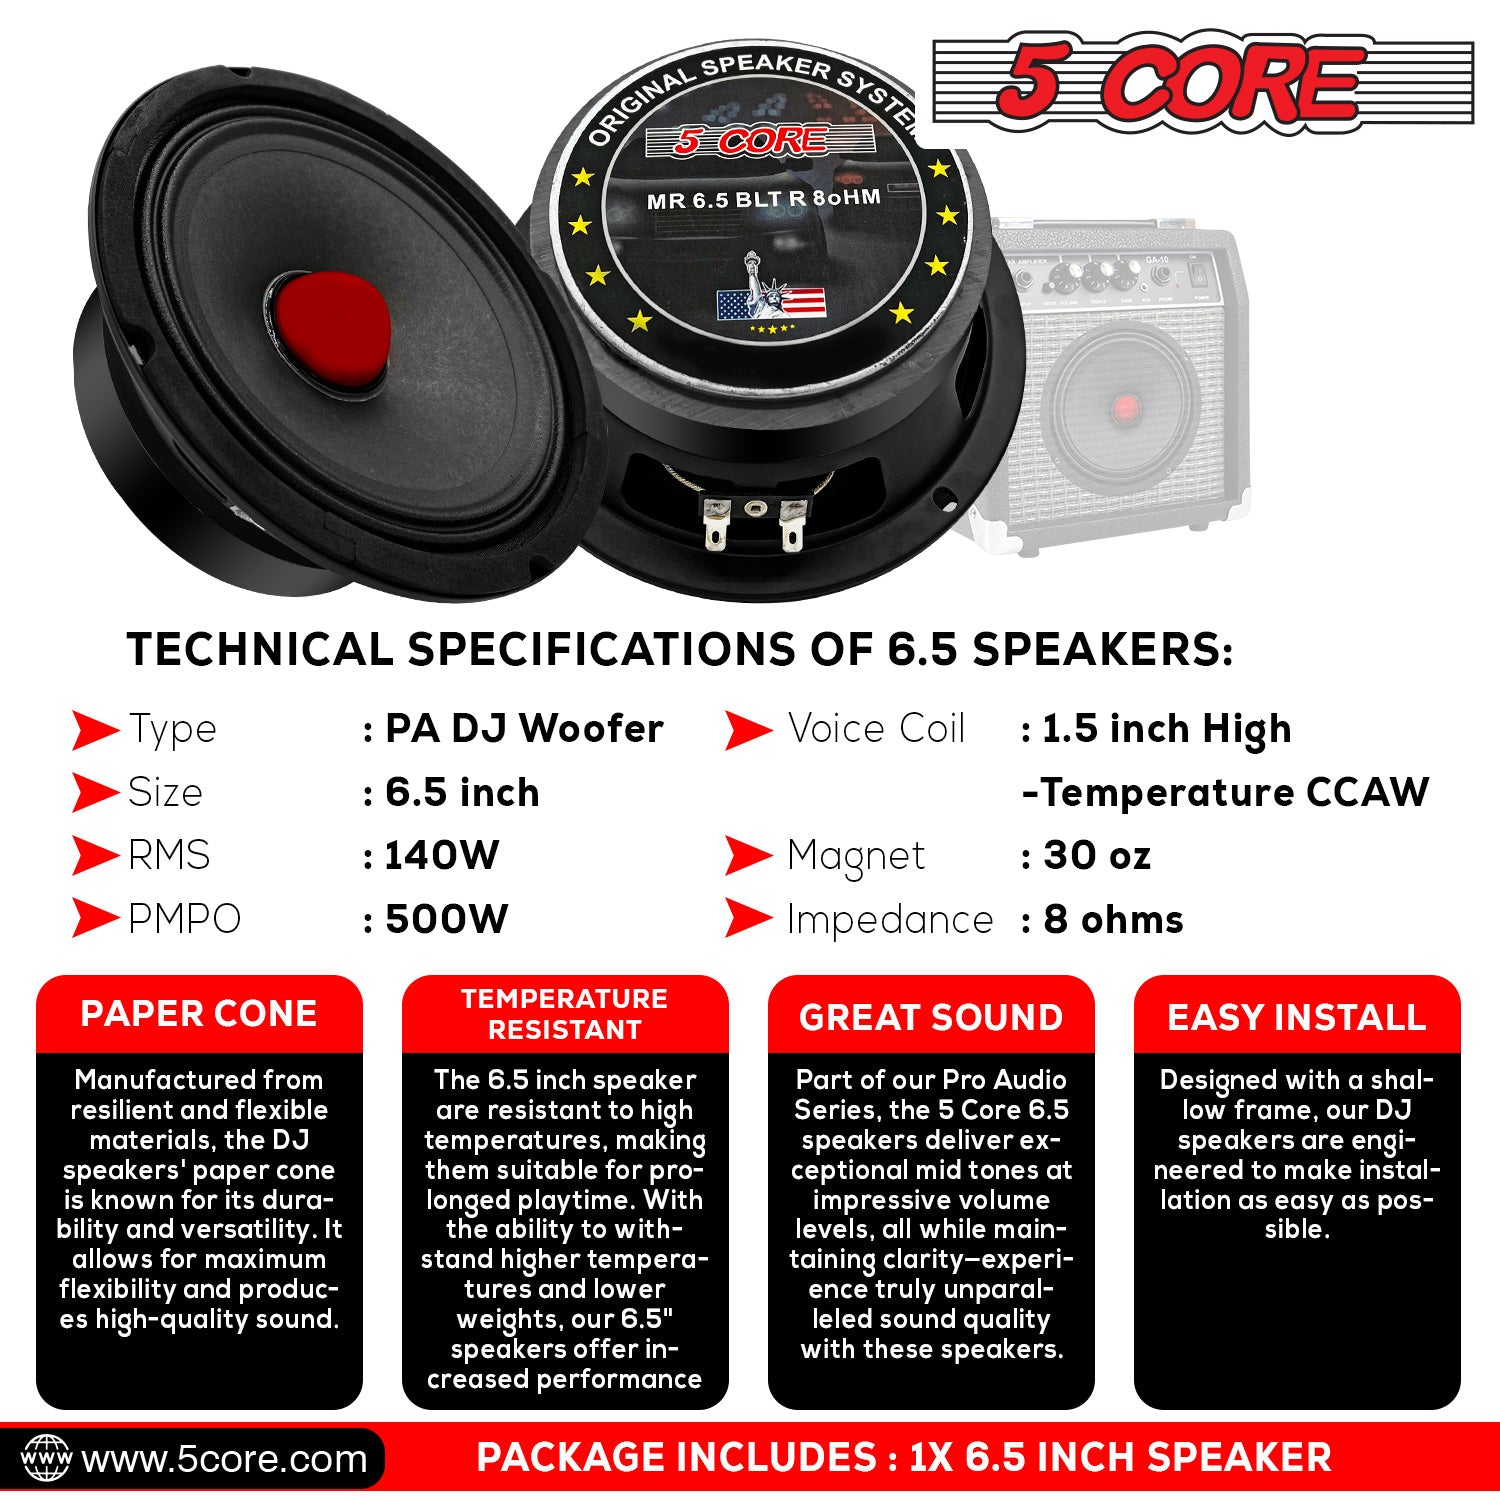 5 Core 6.5 Inch Midrange Door Speaker 580W PMPO Subwoofer • w Red Aluminum Bullet • 8 Ohm Sub Woofer